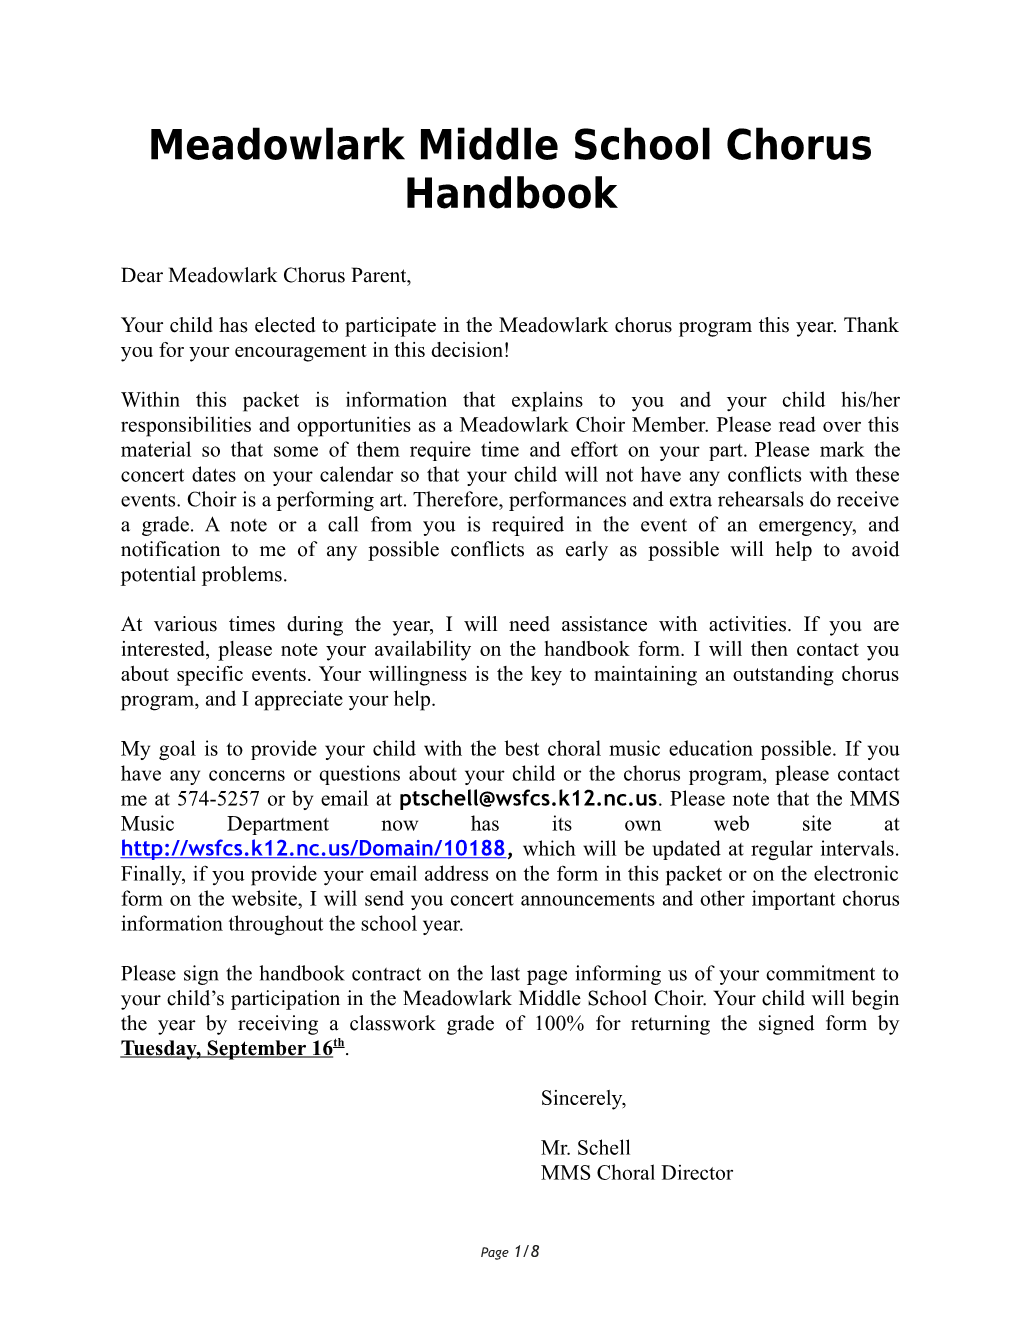 Meadowlark Middle School Chorus Handbook